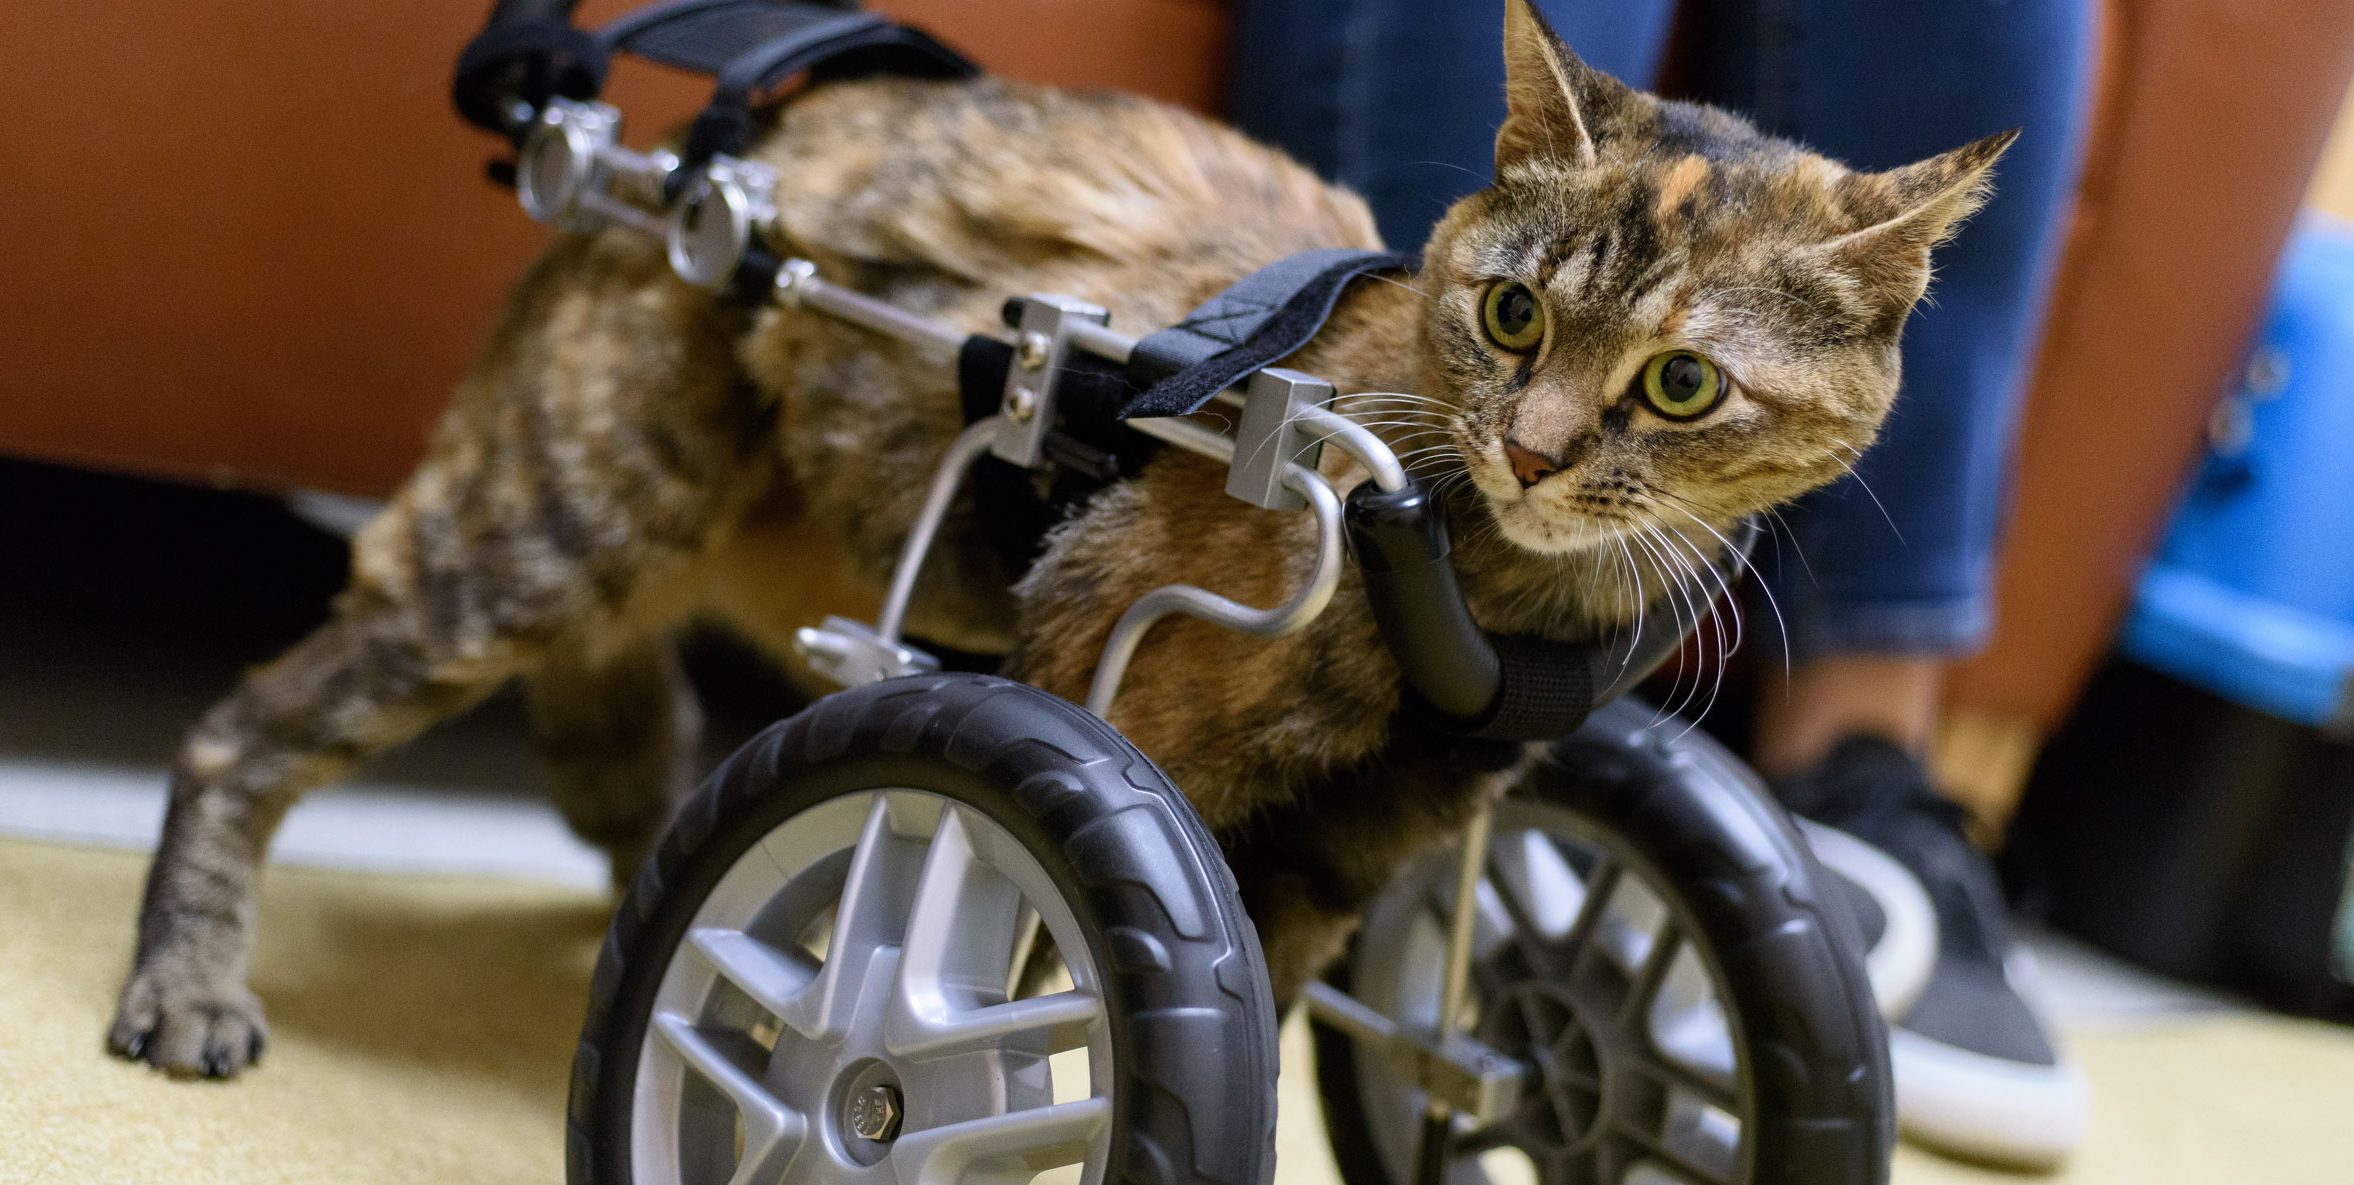 thumper the cat in wheel cart